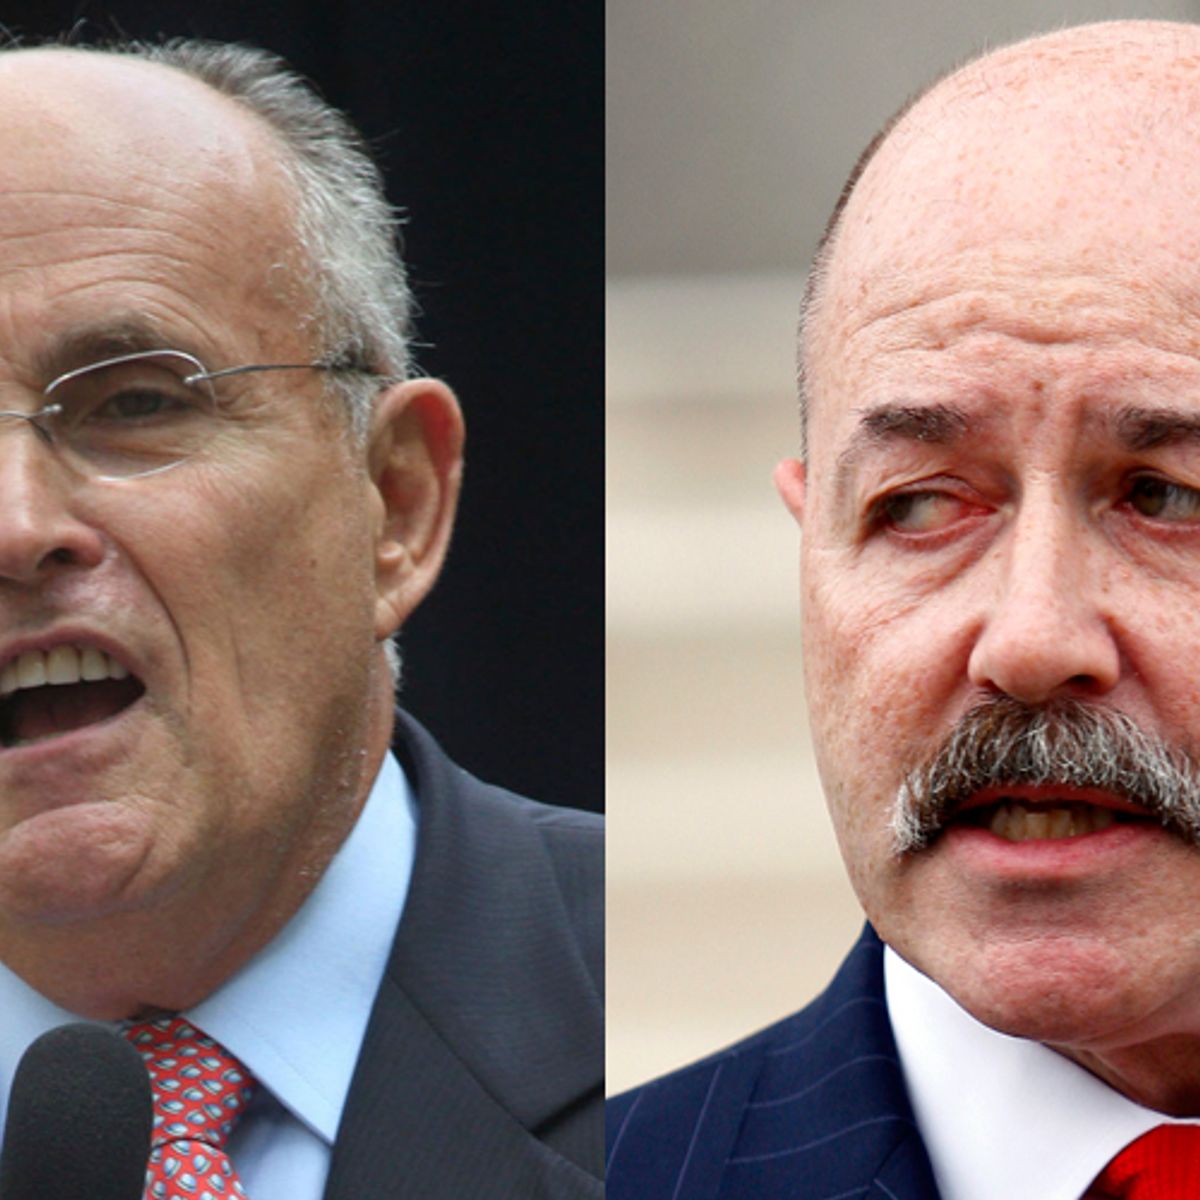 Rudy Giuliani Heads To New Hampshire Bernie Kerik Heads To Jail